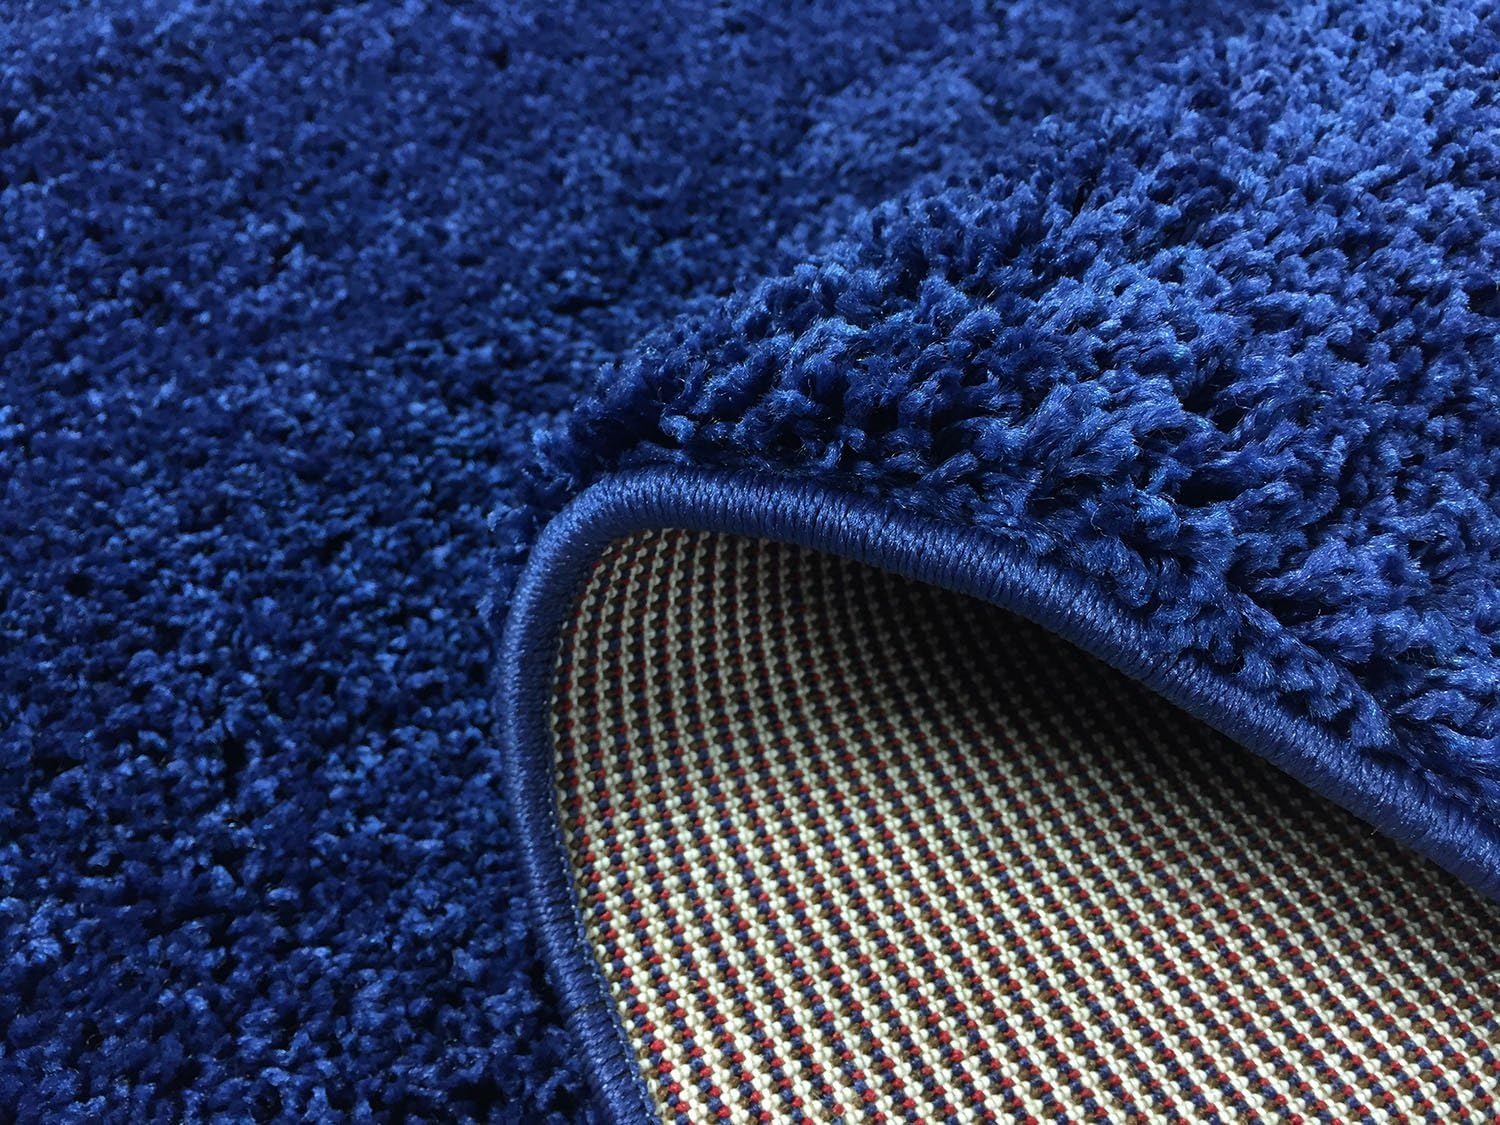 SOHO Shaggy Collection Solid Color Shag Area Rug (Navy Blue, 8 x 10)